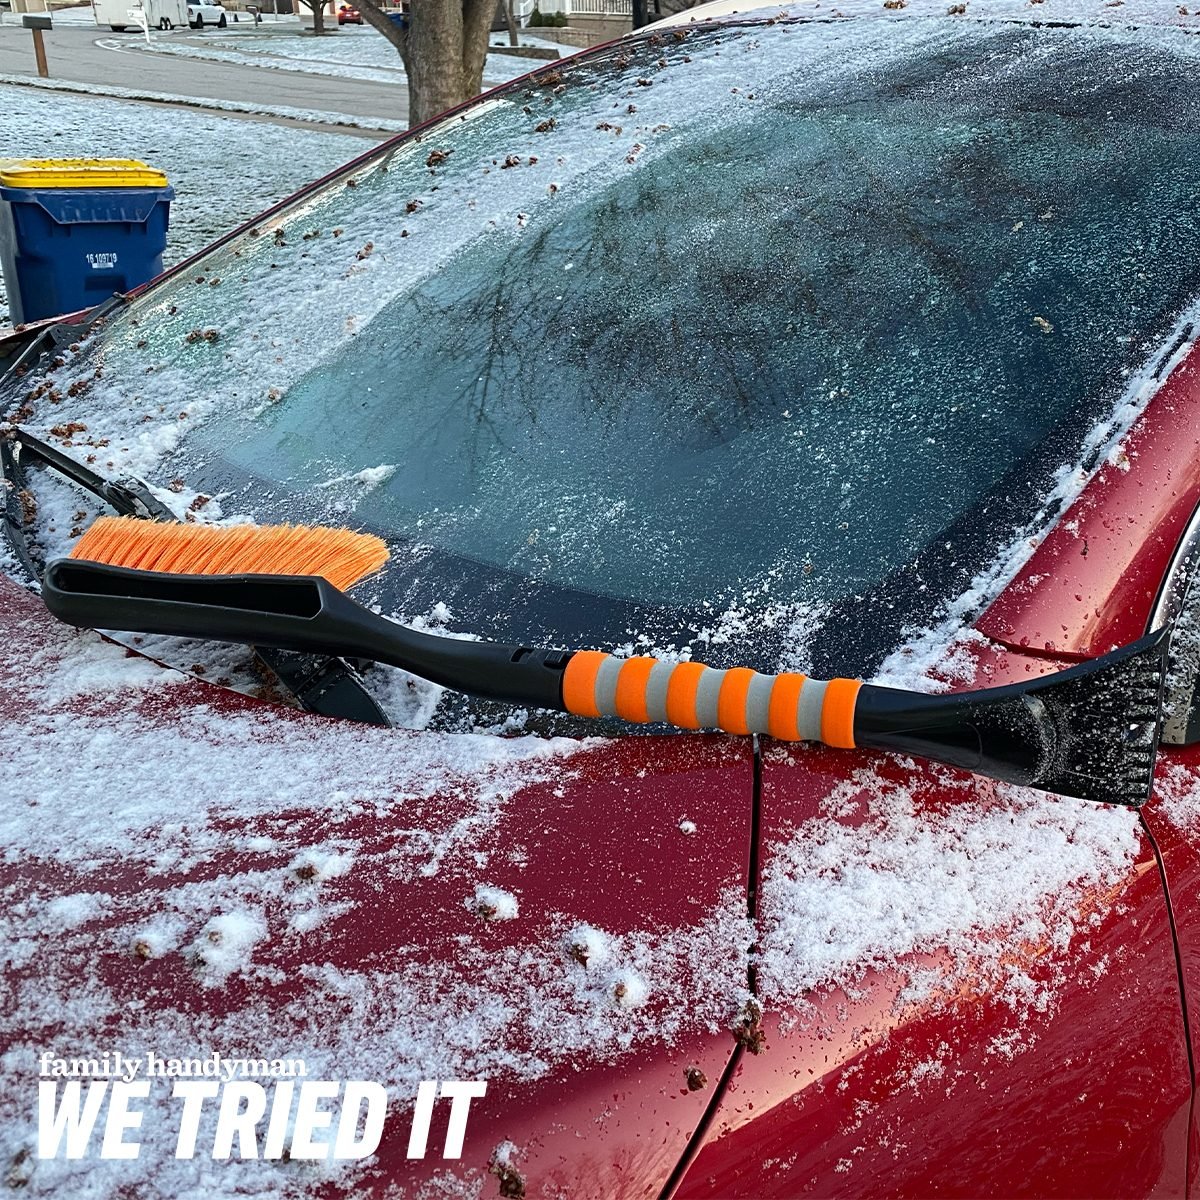 AstroAI Ice Scraper and Detachable Snow Brush for Cars, Foam Grip